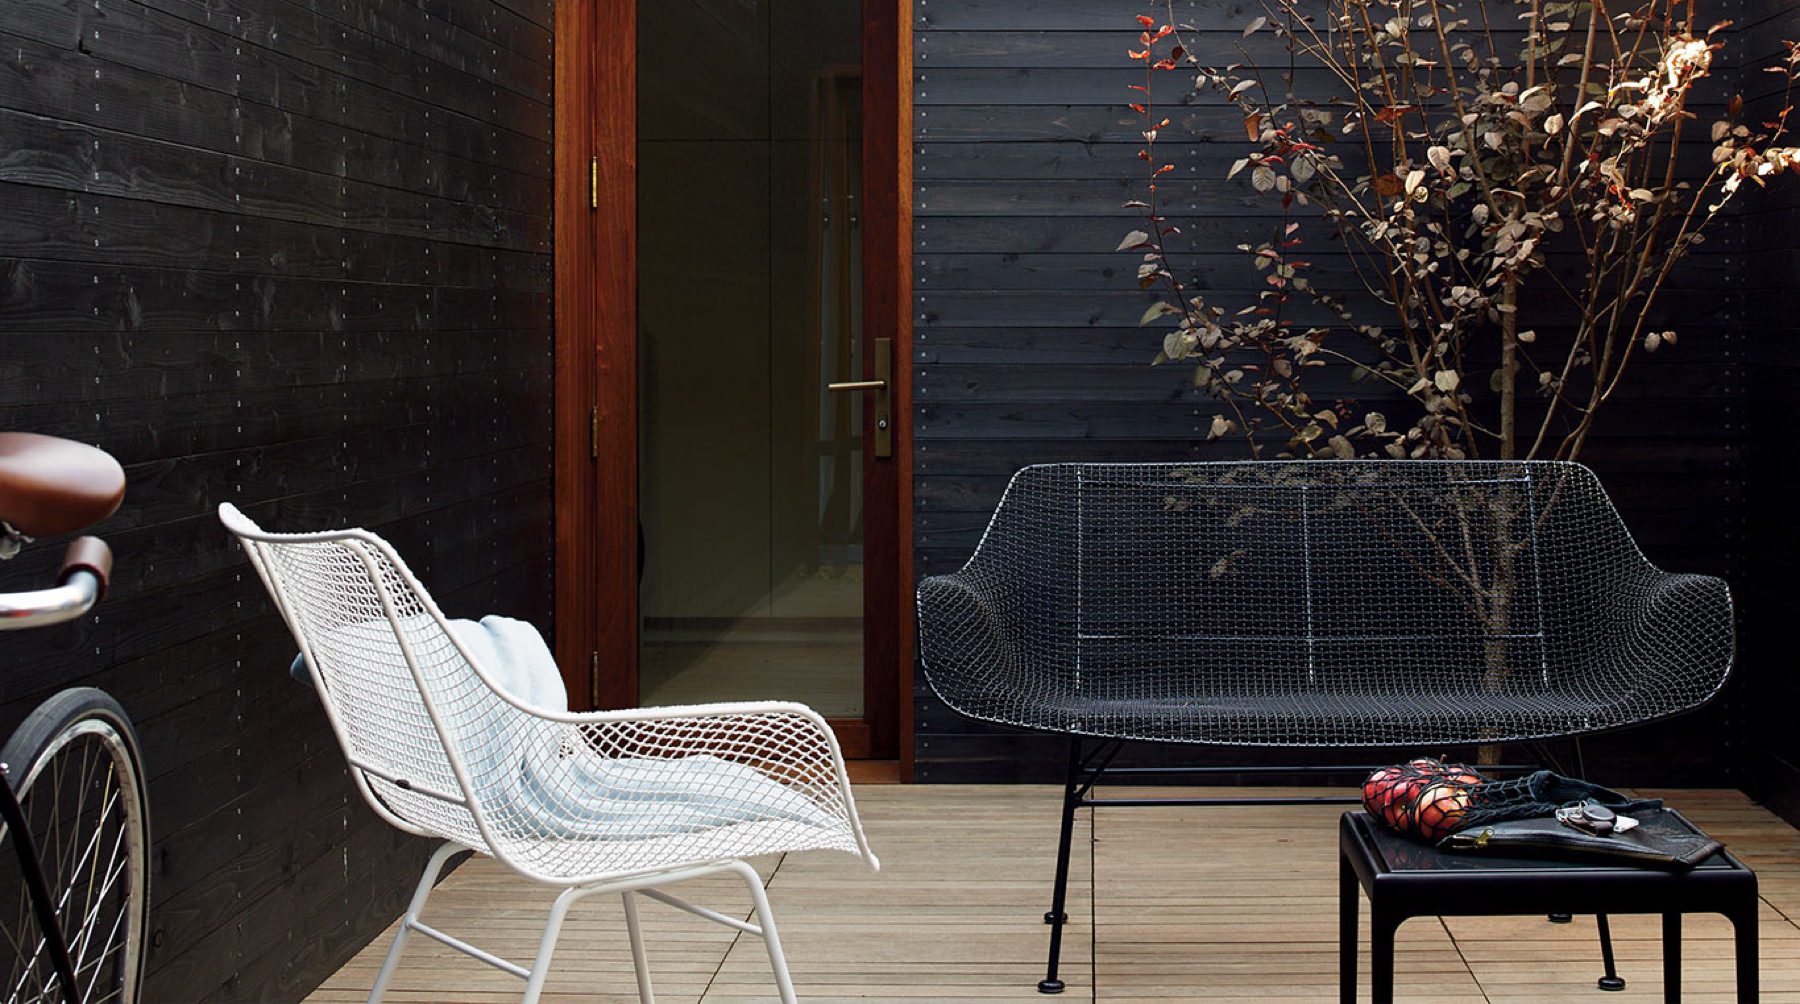 Stylish outdoor furniture